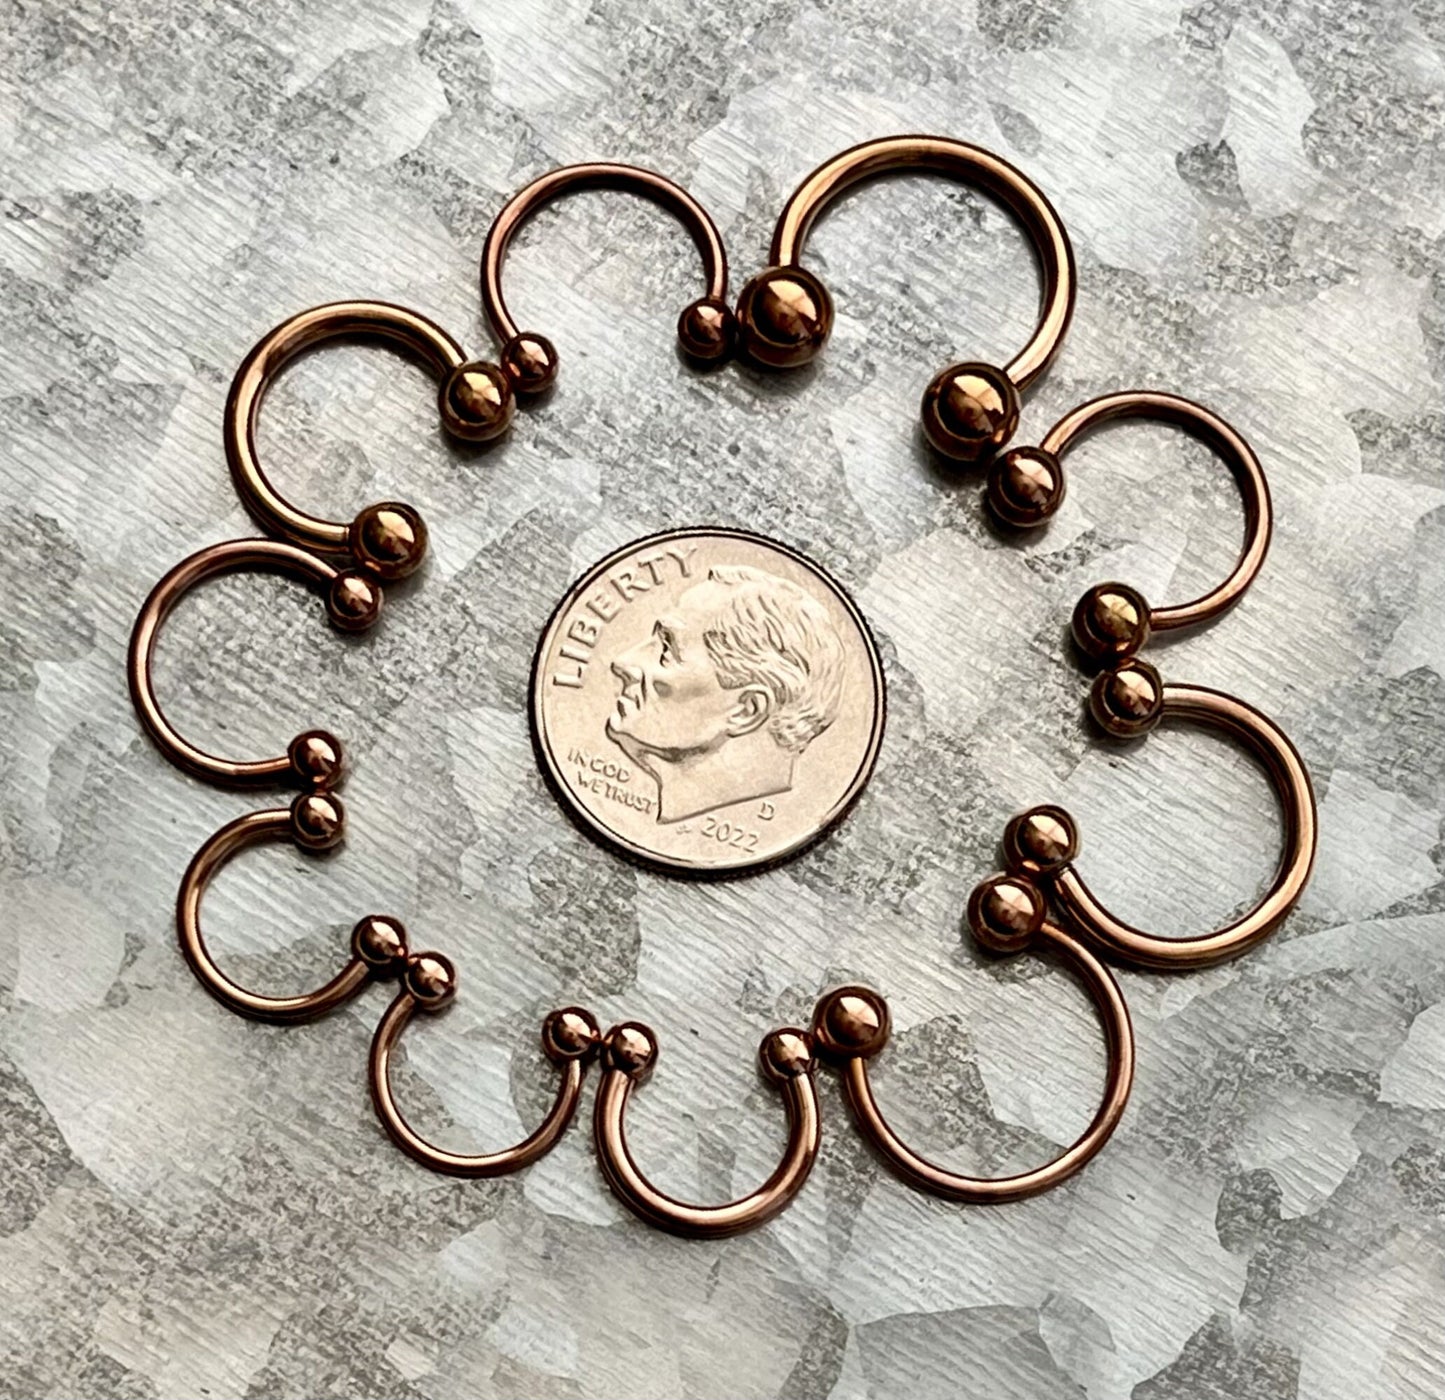 1 Piece Beautiful Rose Gold Internally Threaded Circular Barbell Horseshoe Ring - 18g, 16g, 14g - Assorted Ball Size & Internal Diameter!